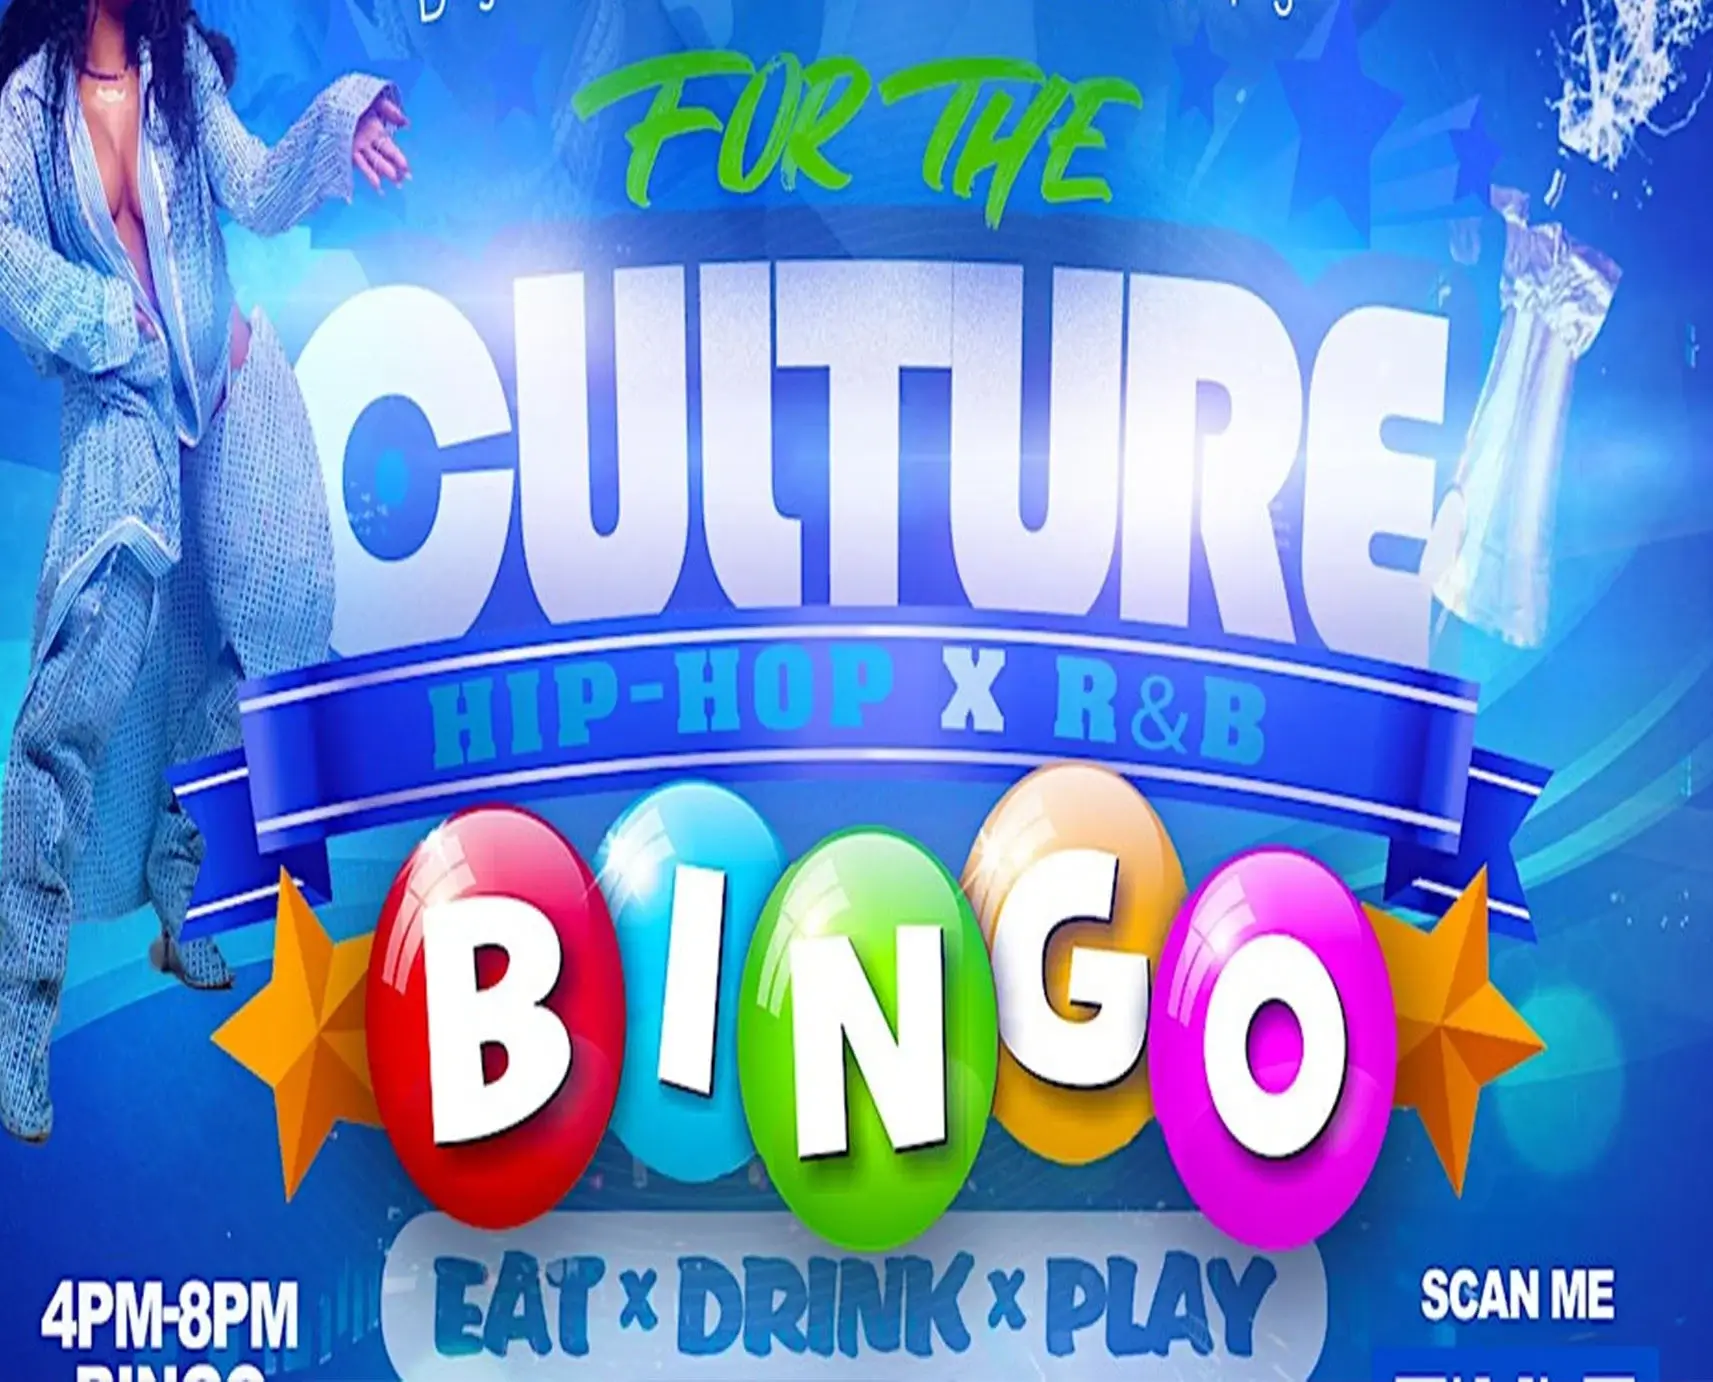 For The Culture: Hip-Hip x R&B Bingo